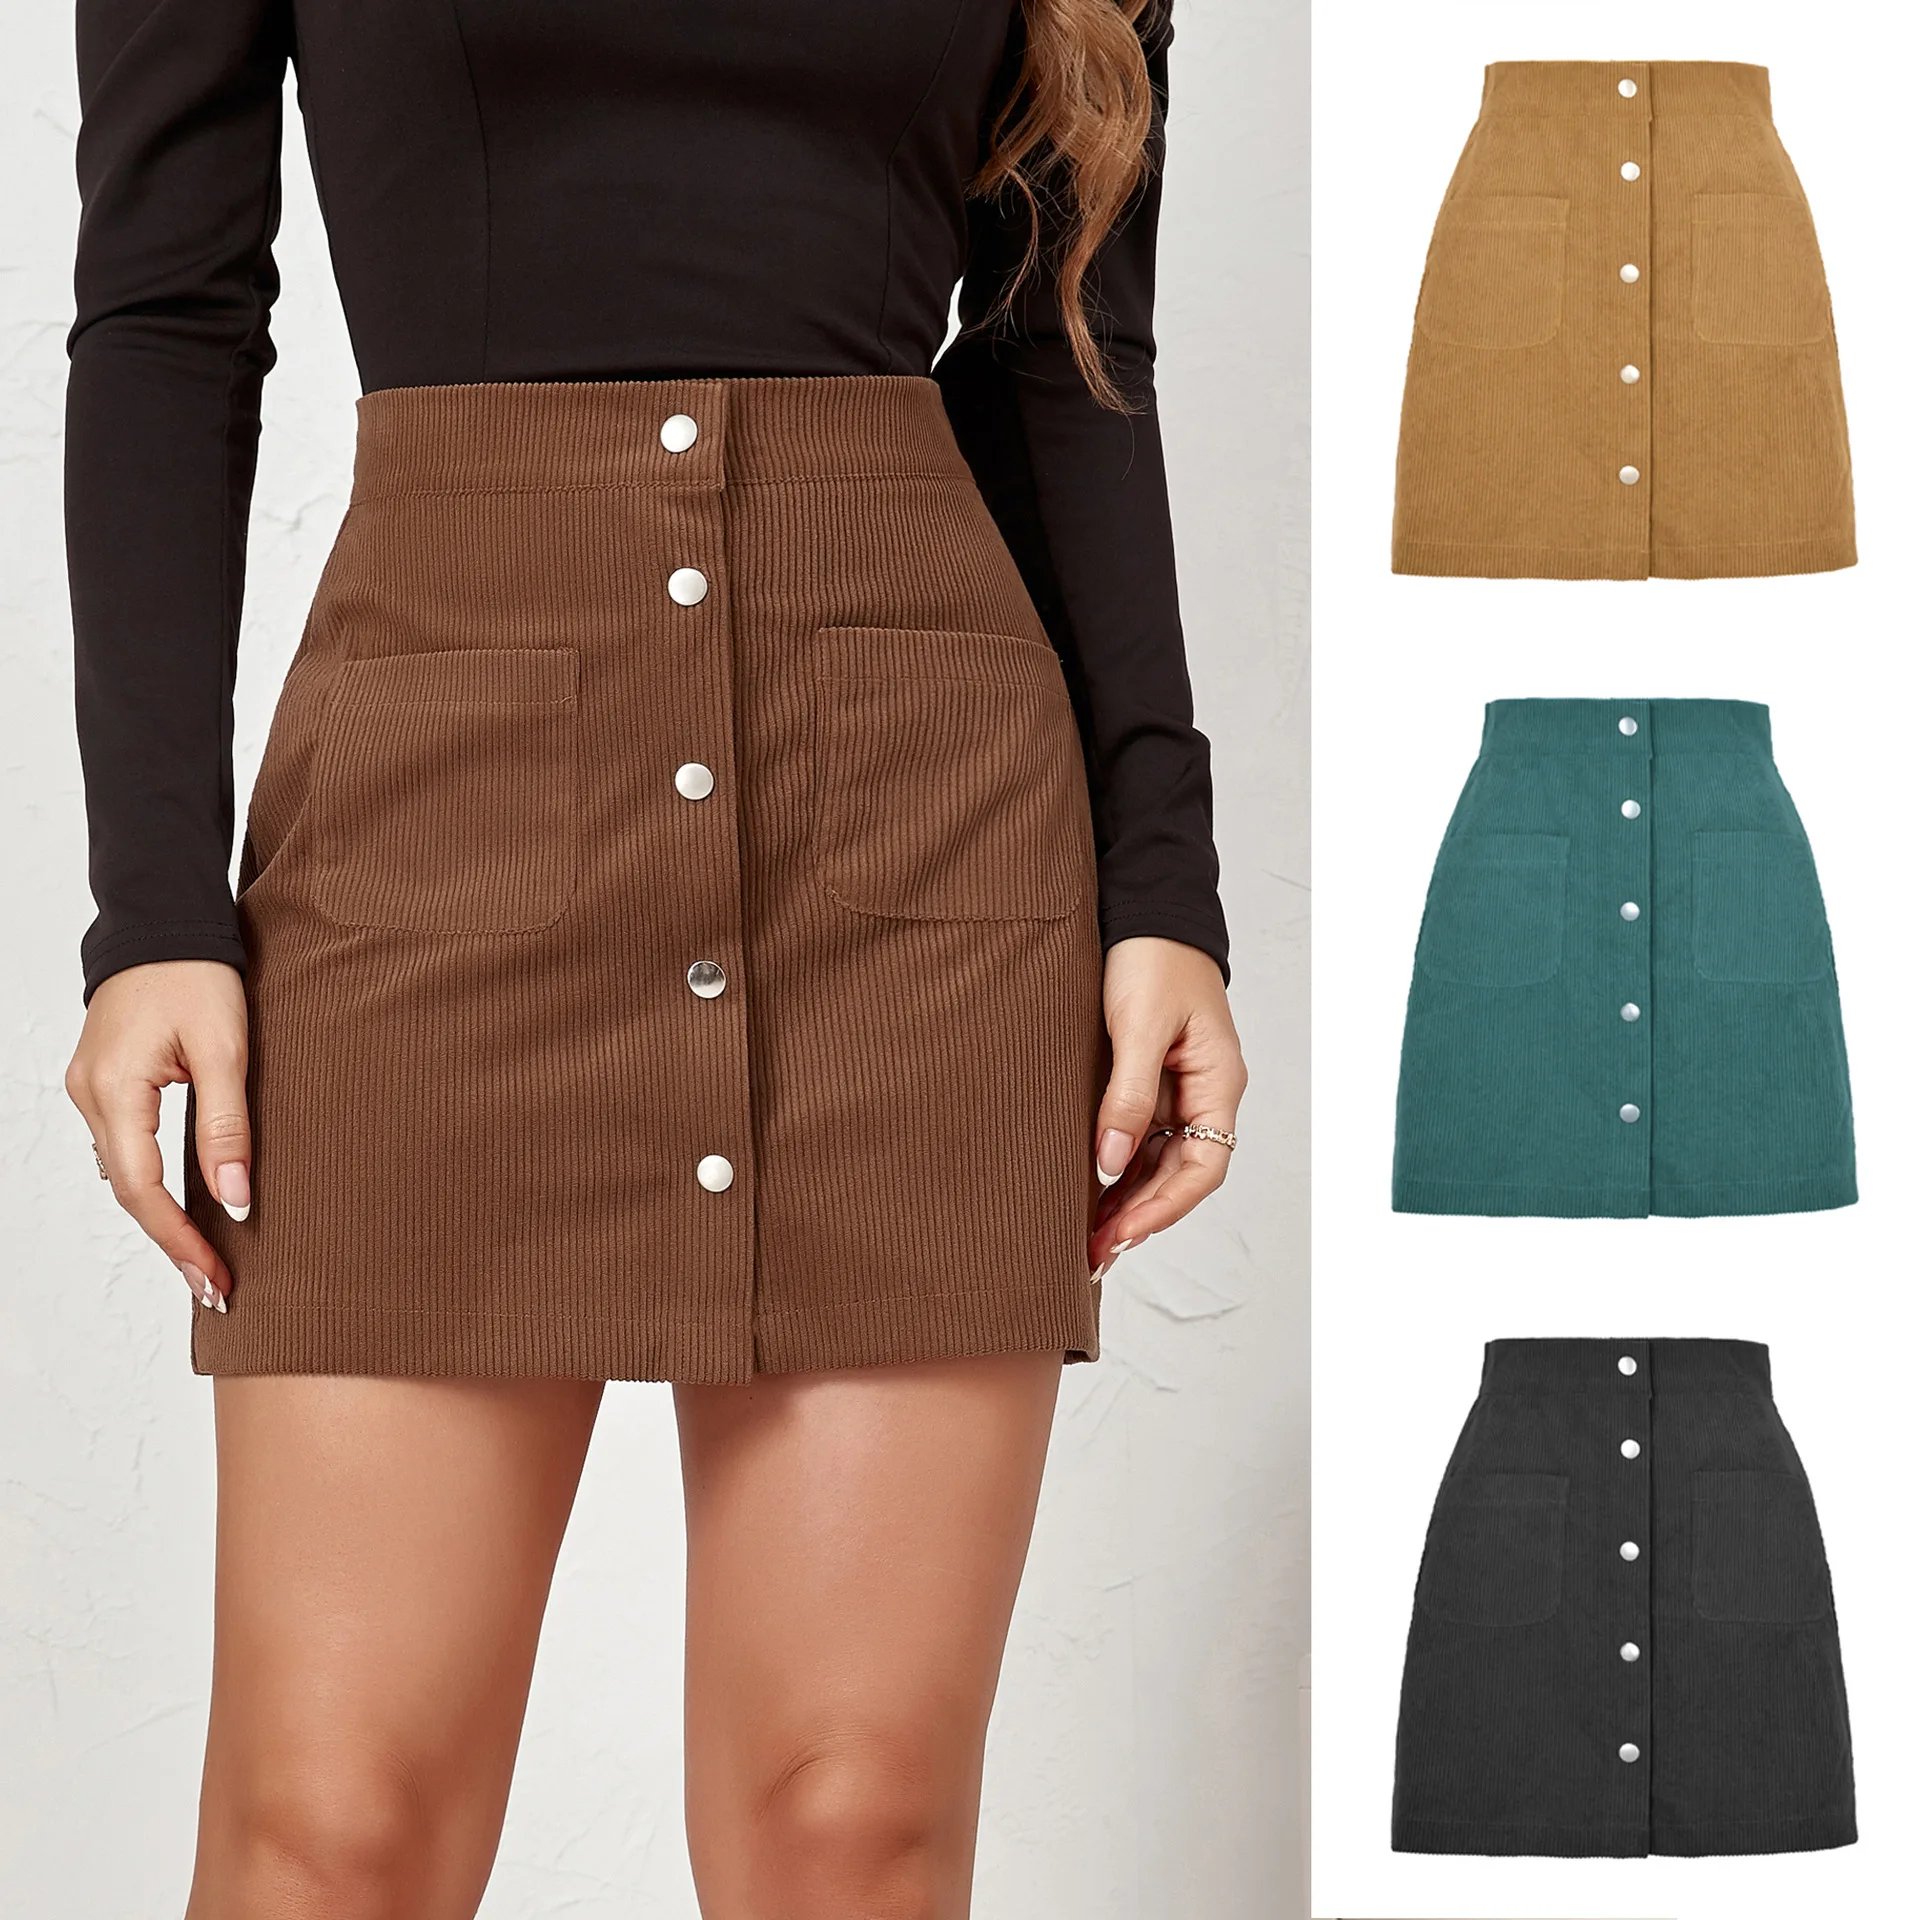 2022 Autumn And Winter Women's Skirt Package Hip Short Skirt Corduroy Pocket Single-Breasted Slim Solid Color Women's Skirt